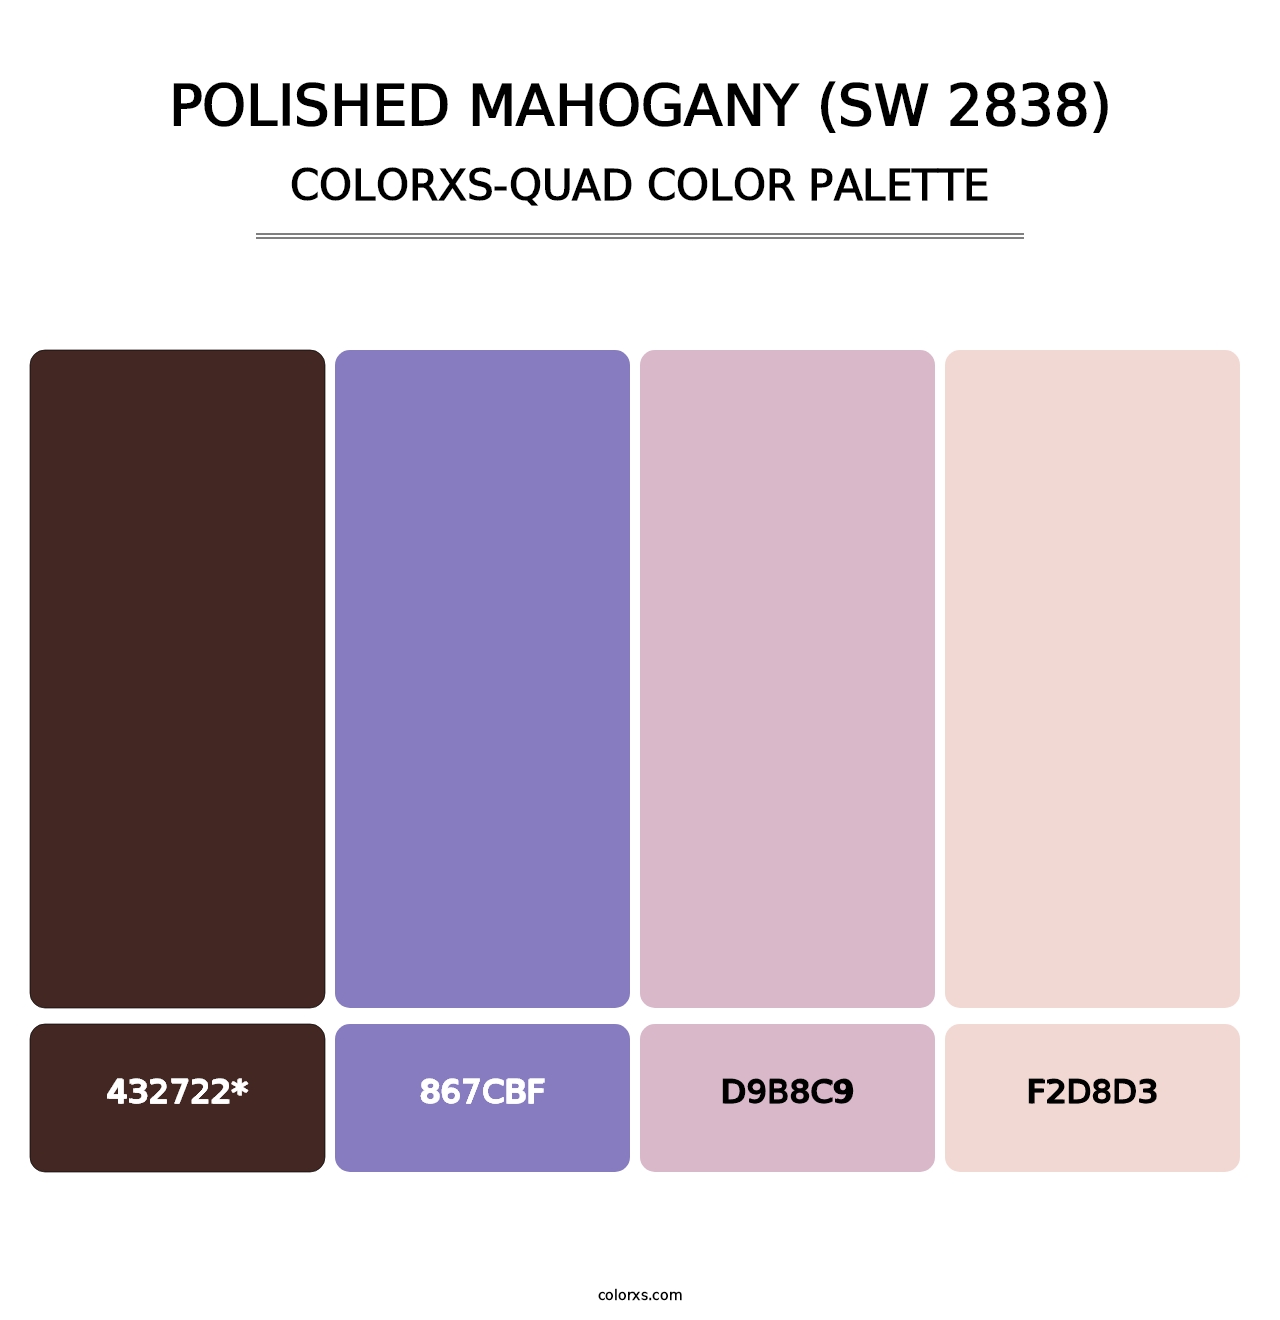 Polished Mahogany (SW 2838) - Colorxs Quad Palette